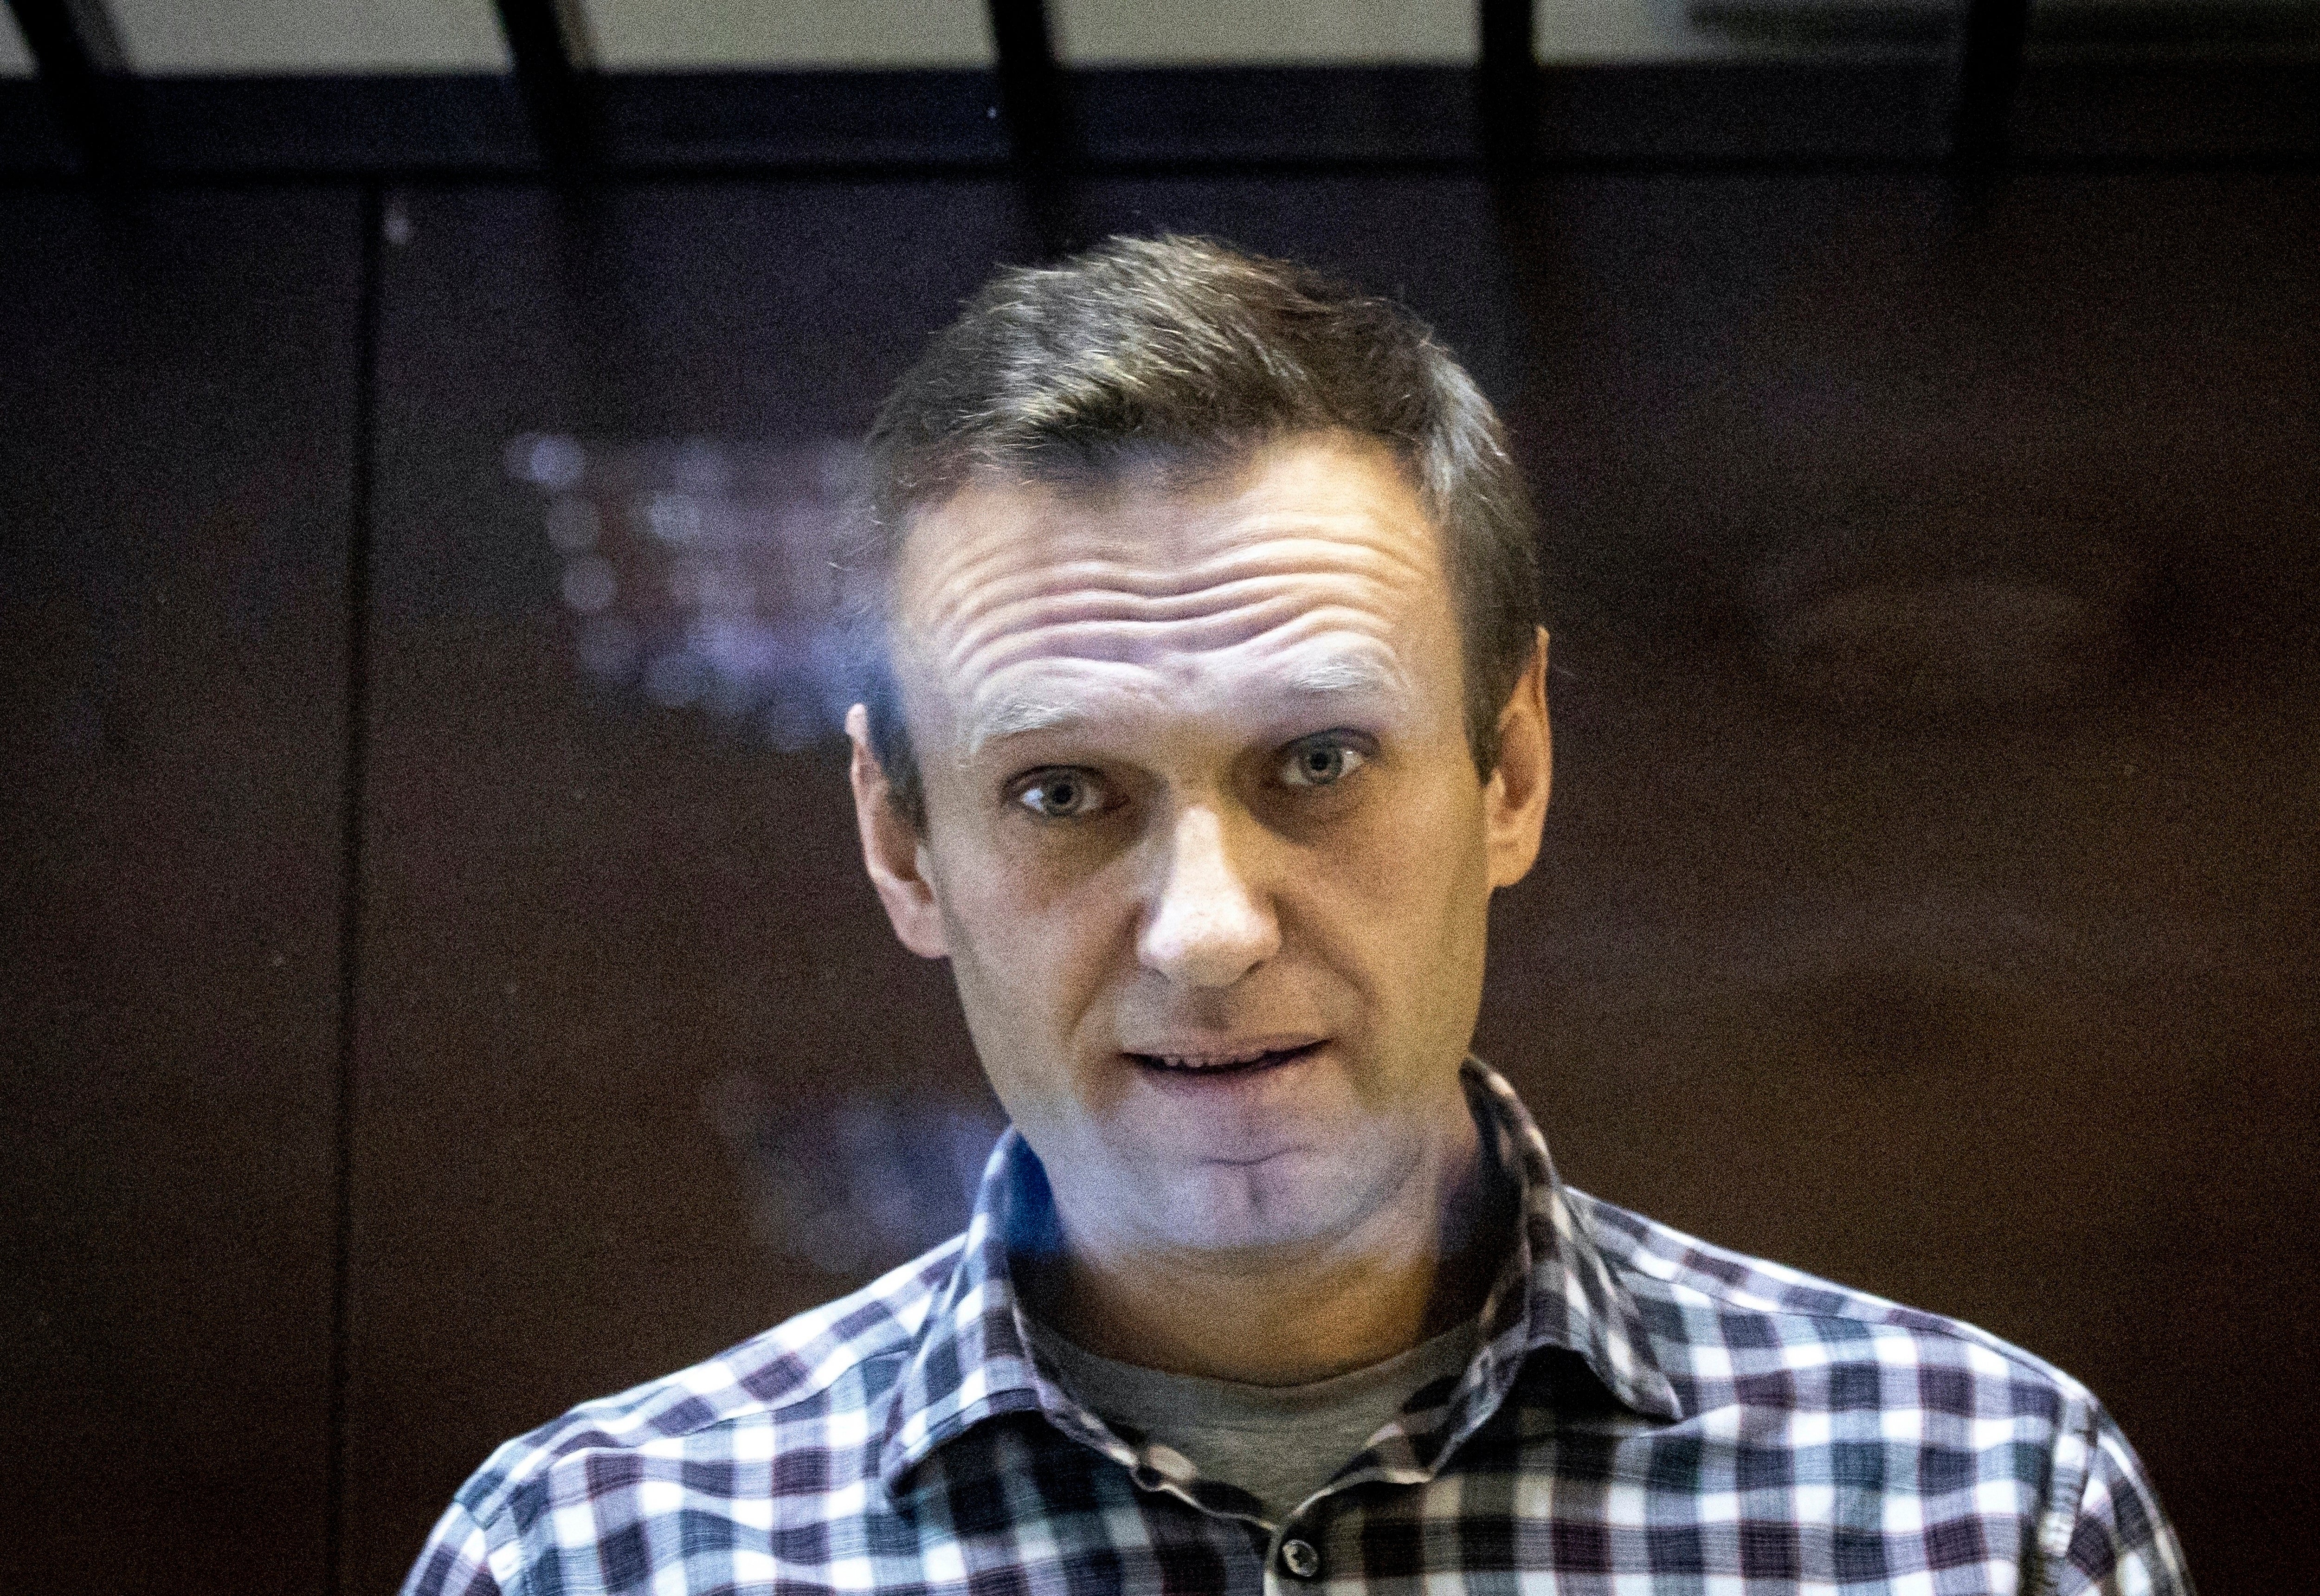 Warning: Russian opposition leader Alexei Navalny